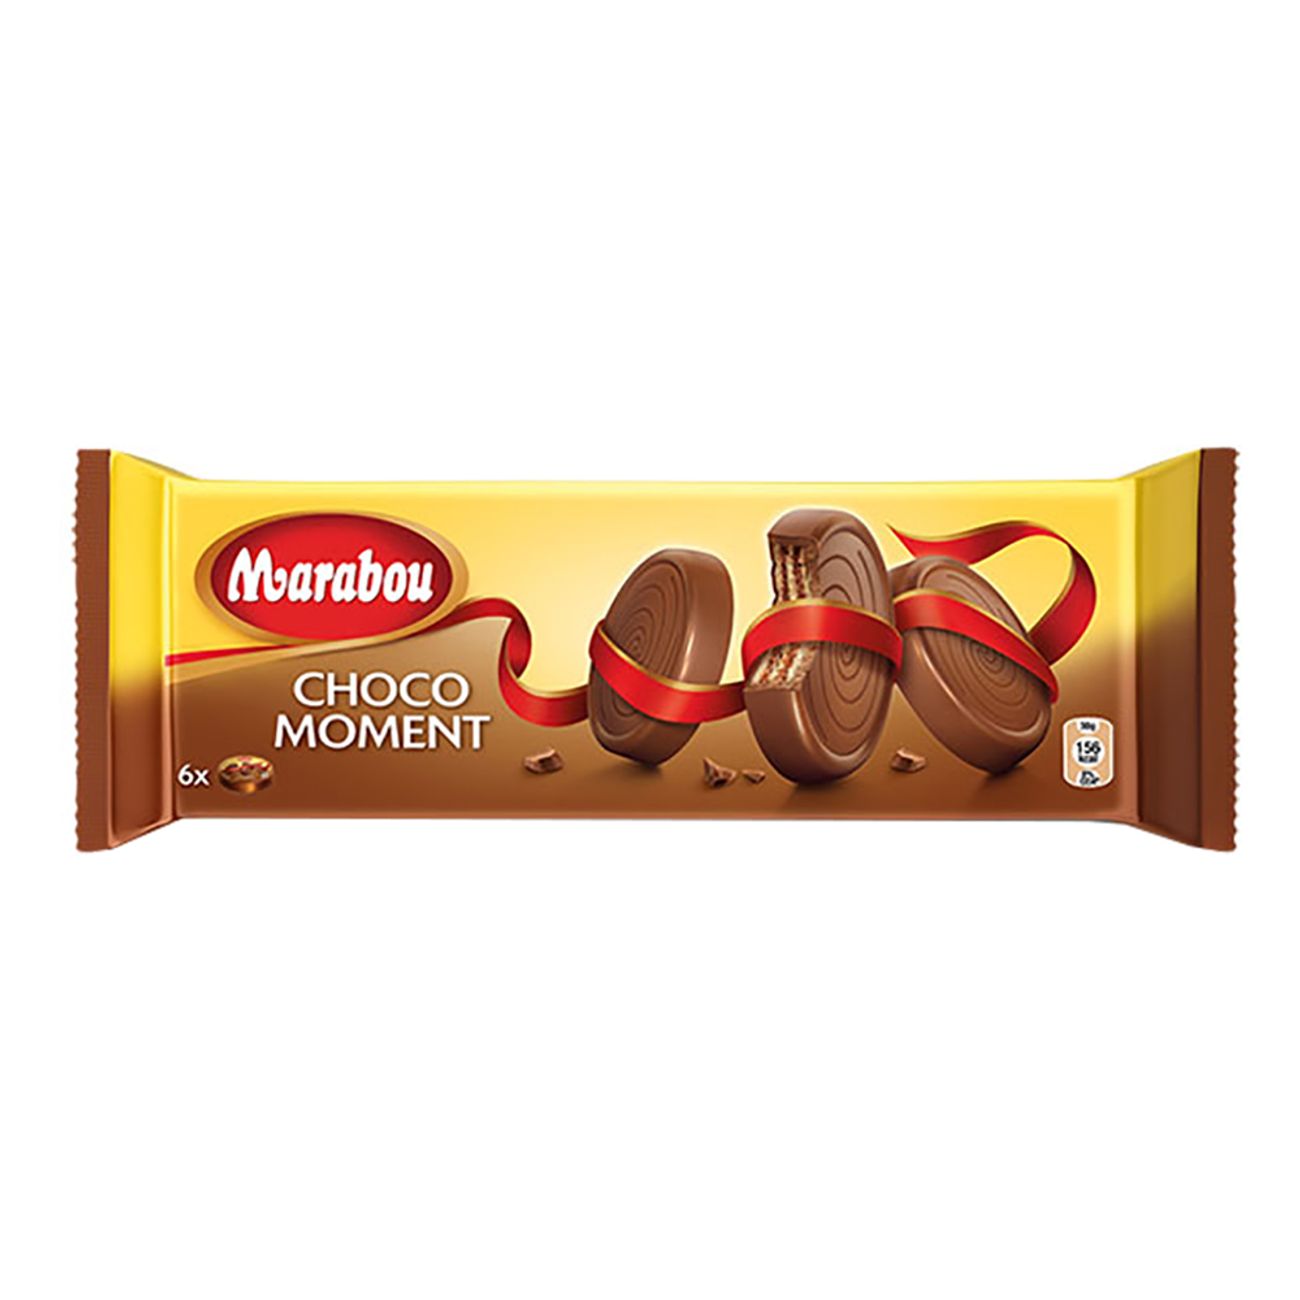 marabou-choco-moment-chokladkaka-79312-1